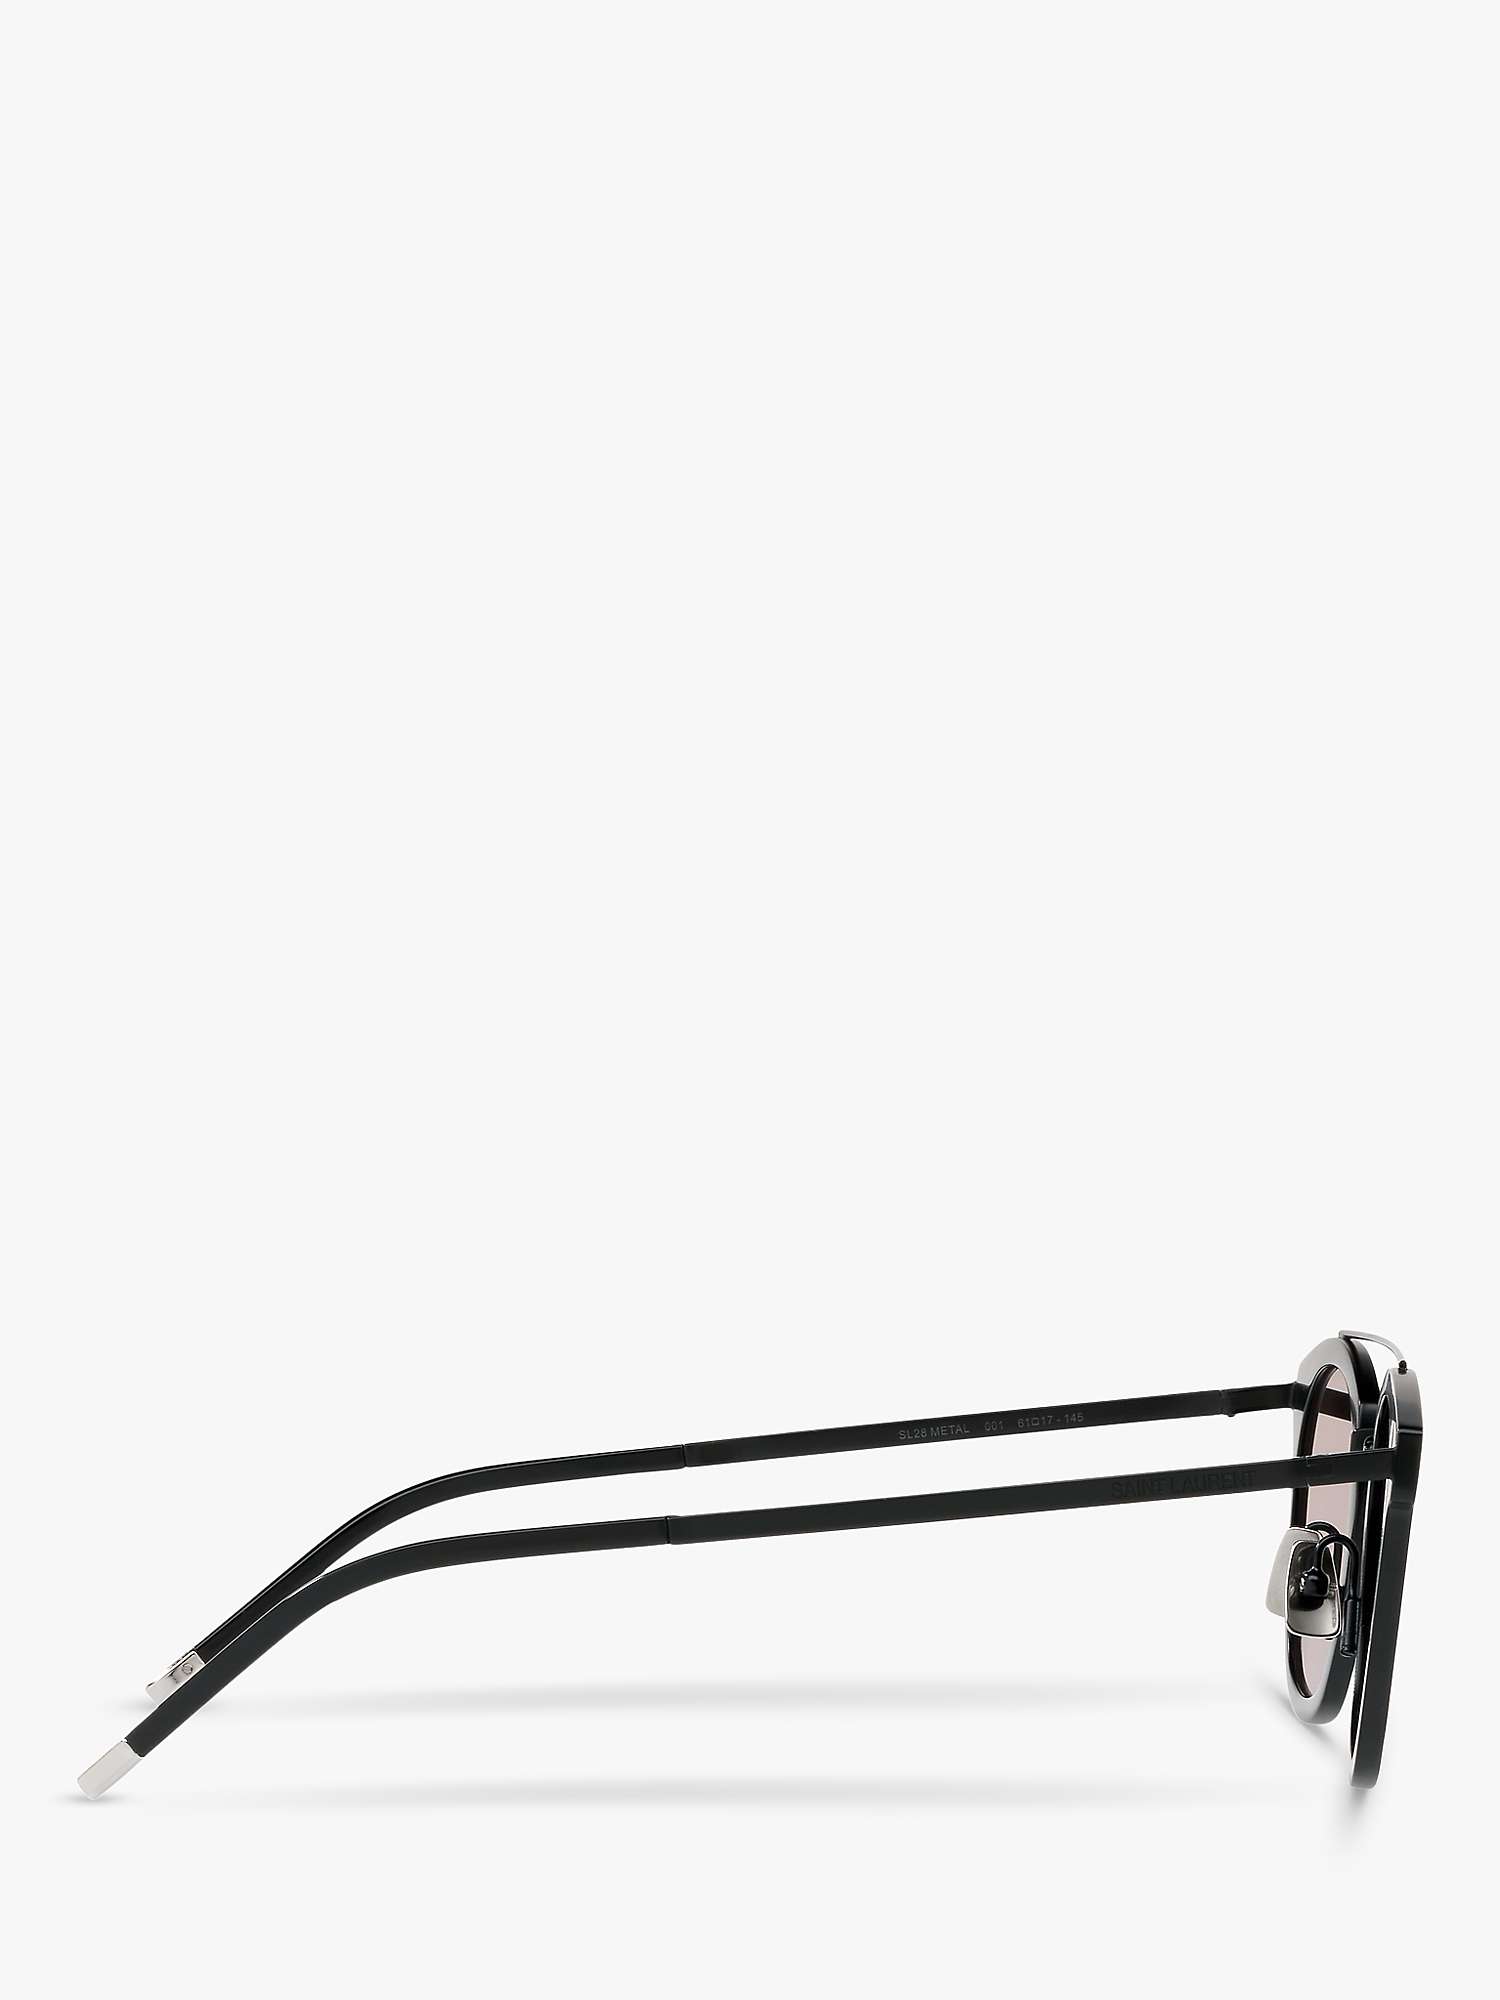 Buy Yves Saint Laurent SL 28 Unisex Metal Rectangular Sunglasses, Matte Black/Grey Online at johnlewis.com